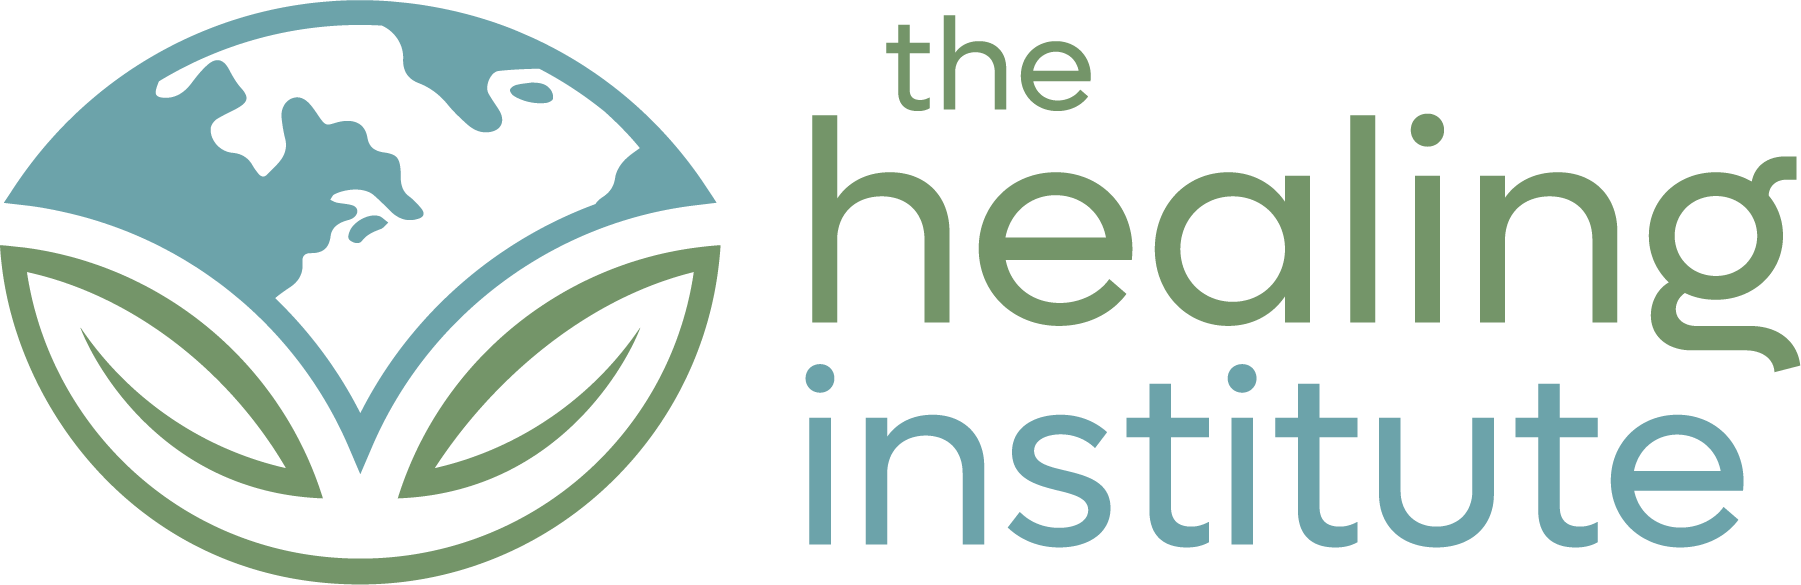 the healing institute logo